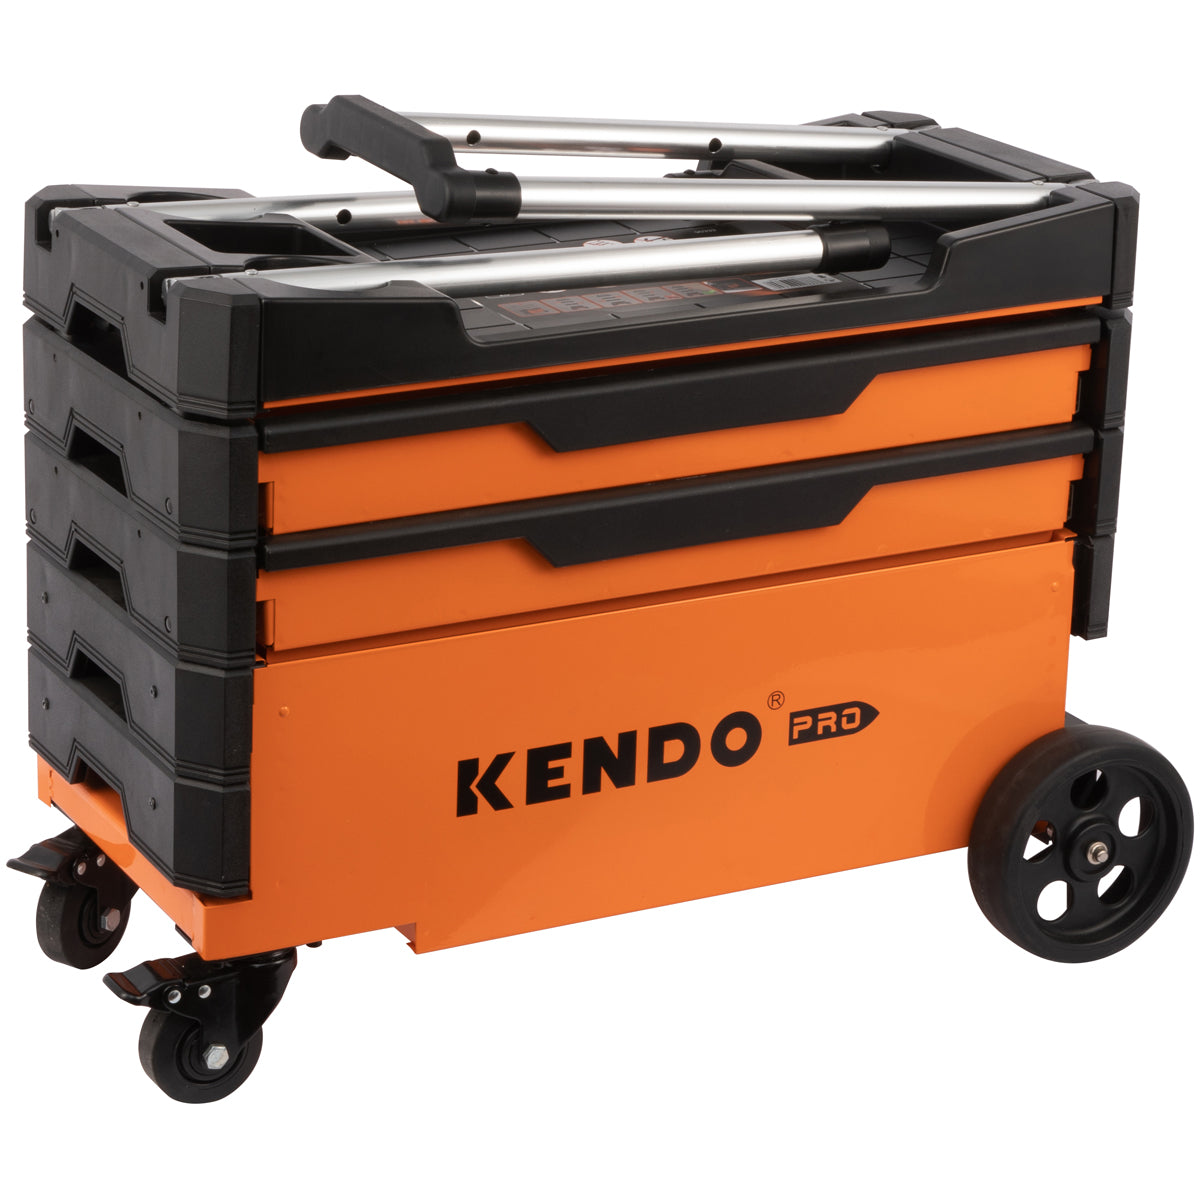 Kendo 900mm Foldable Tool Trolley